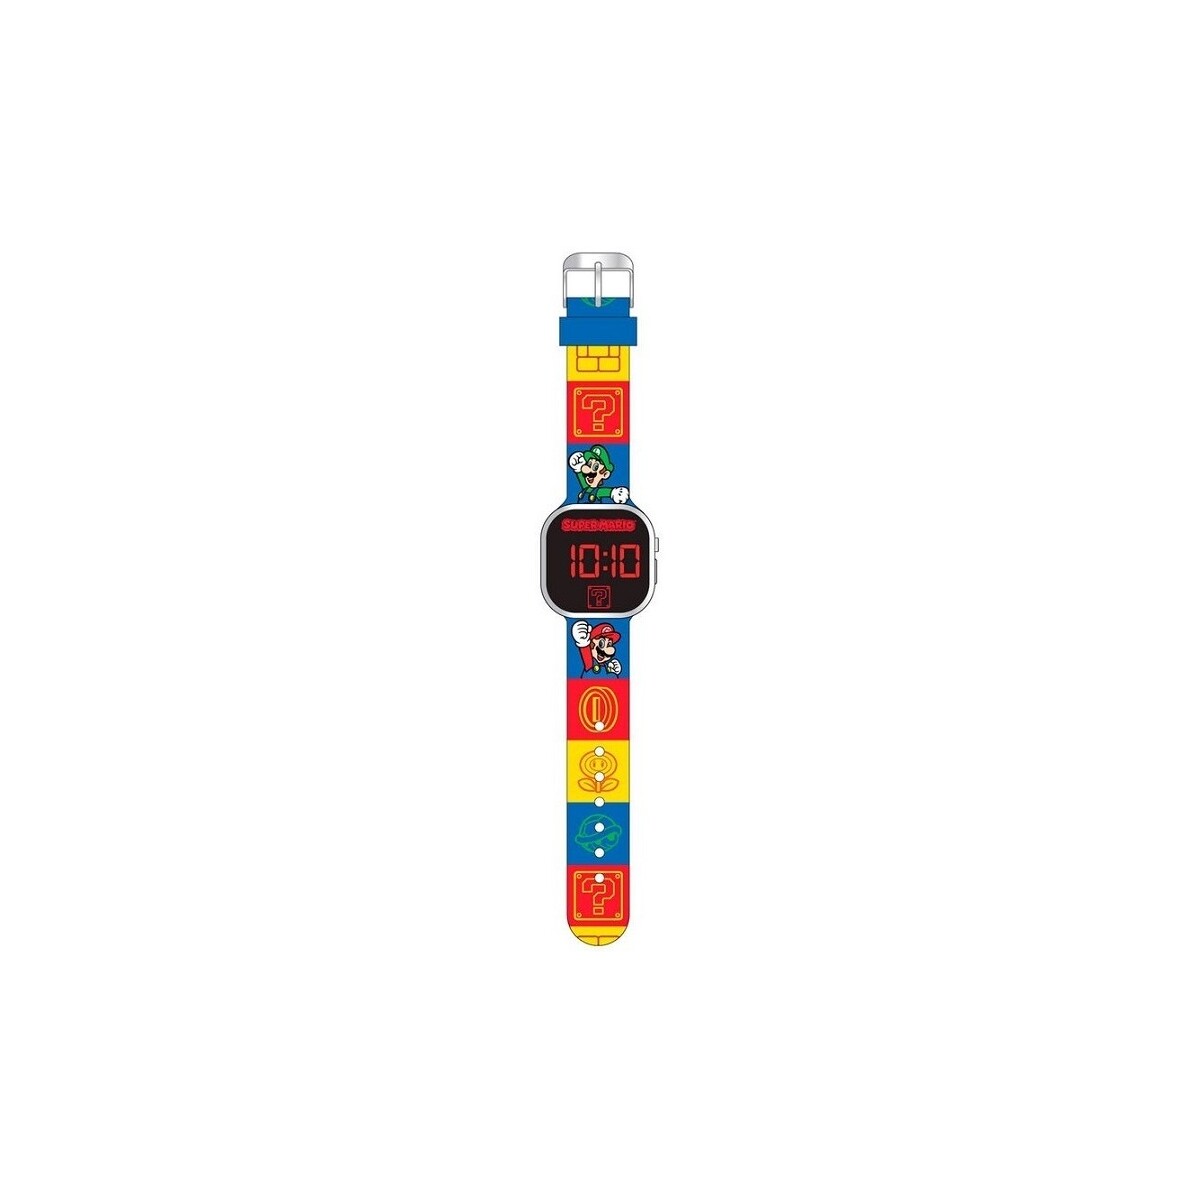 Relógios & jóias Relógios Digitais Super Mario Bros  Multicolor